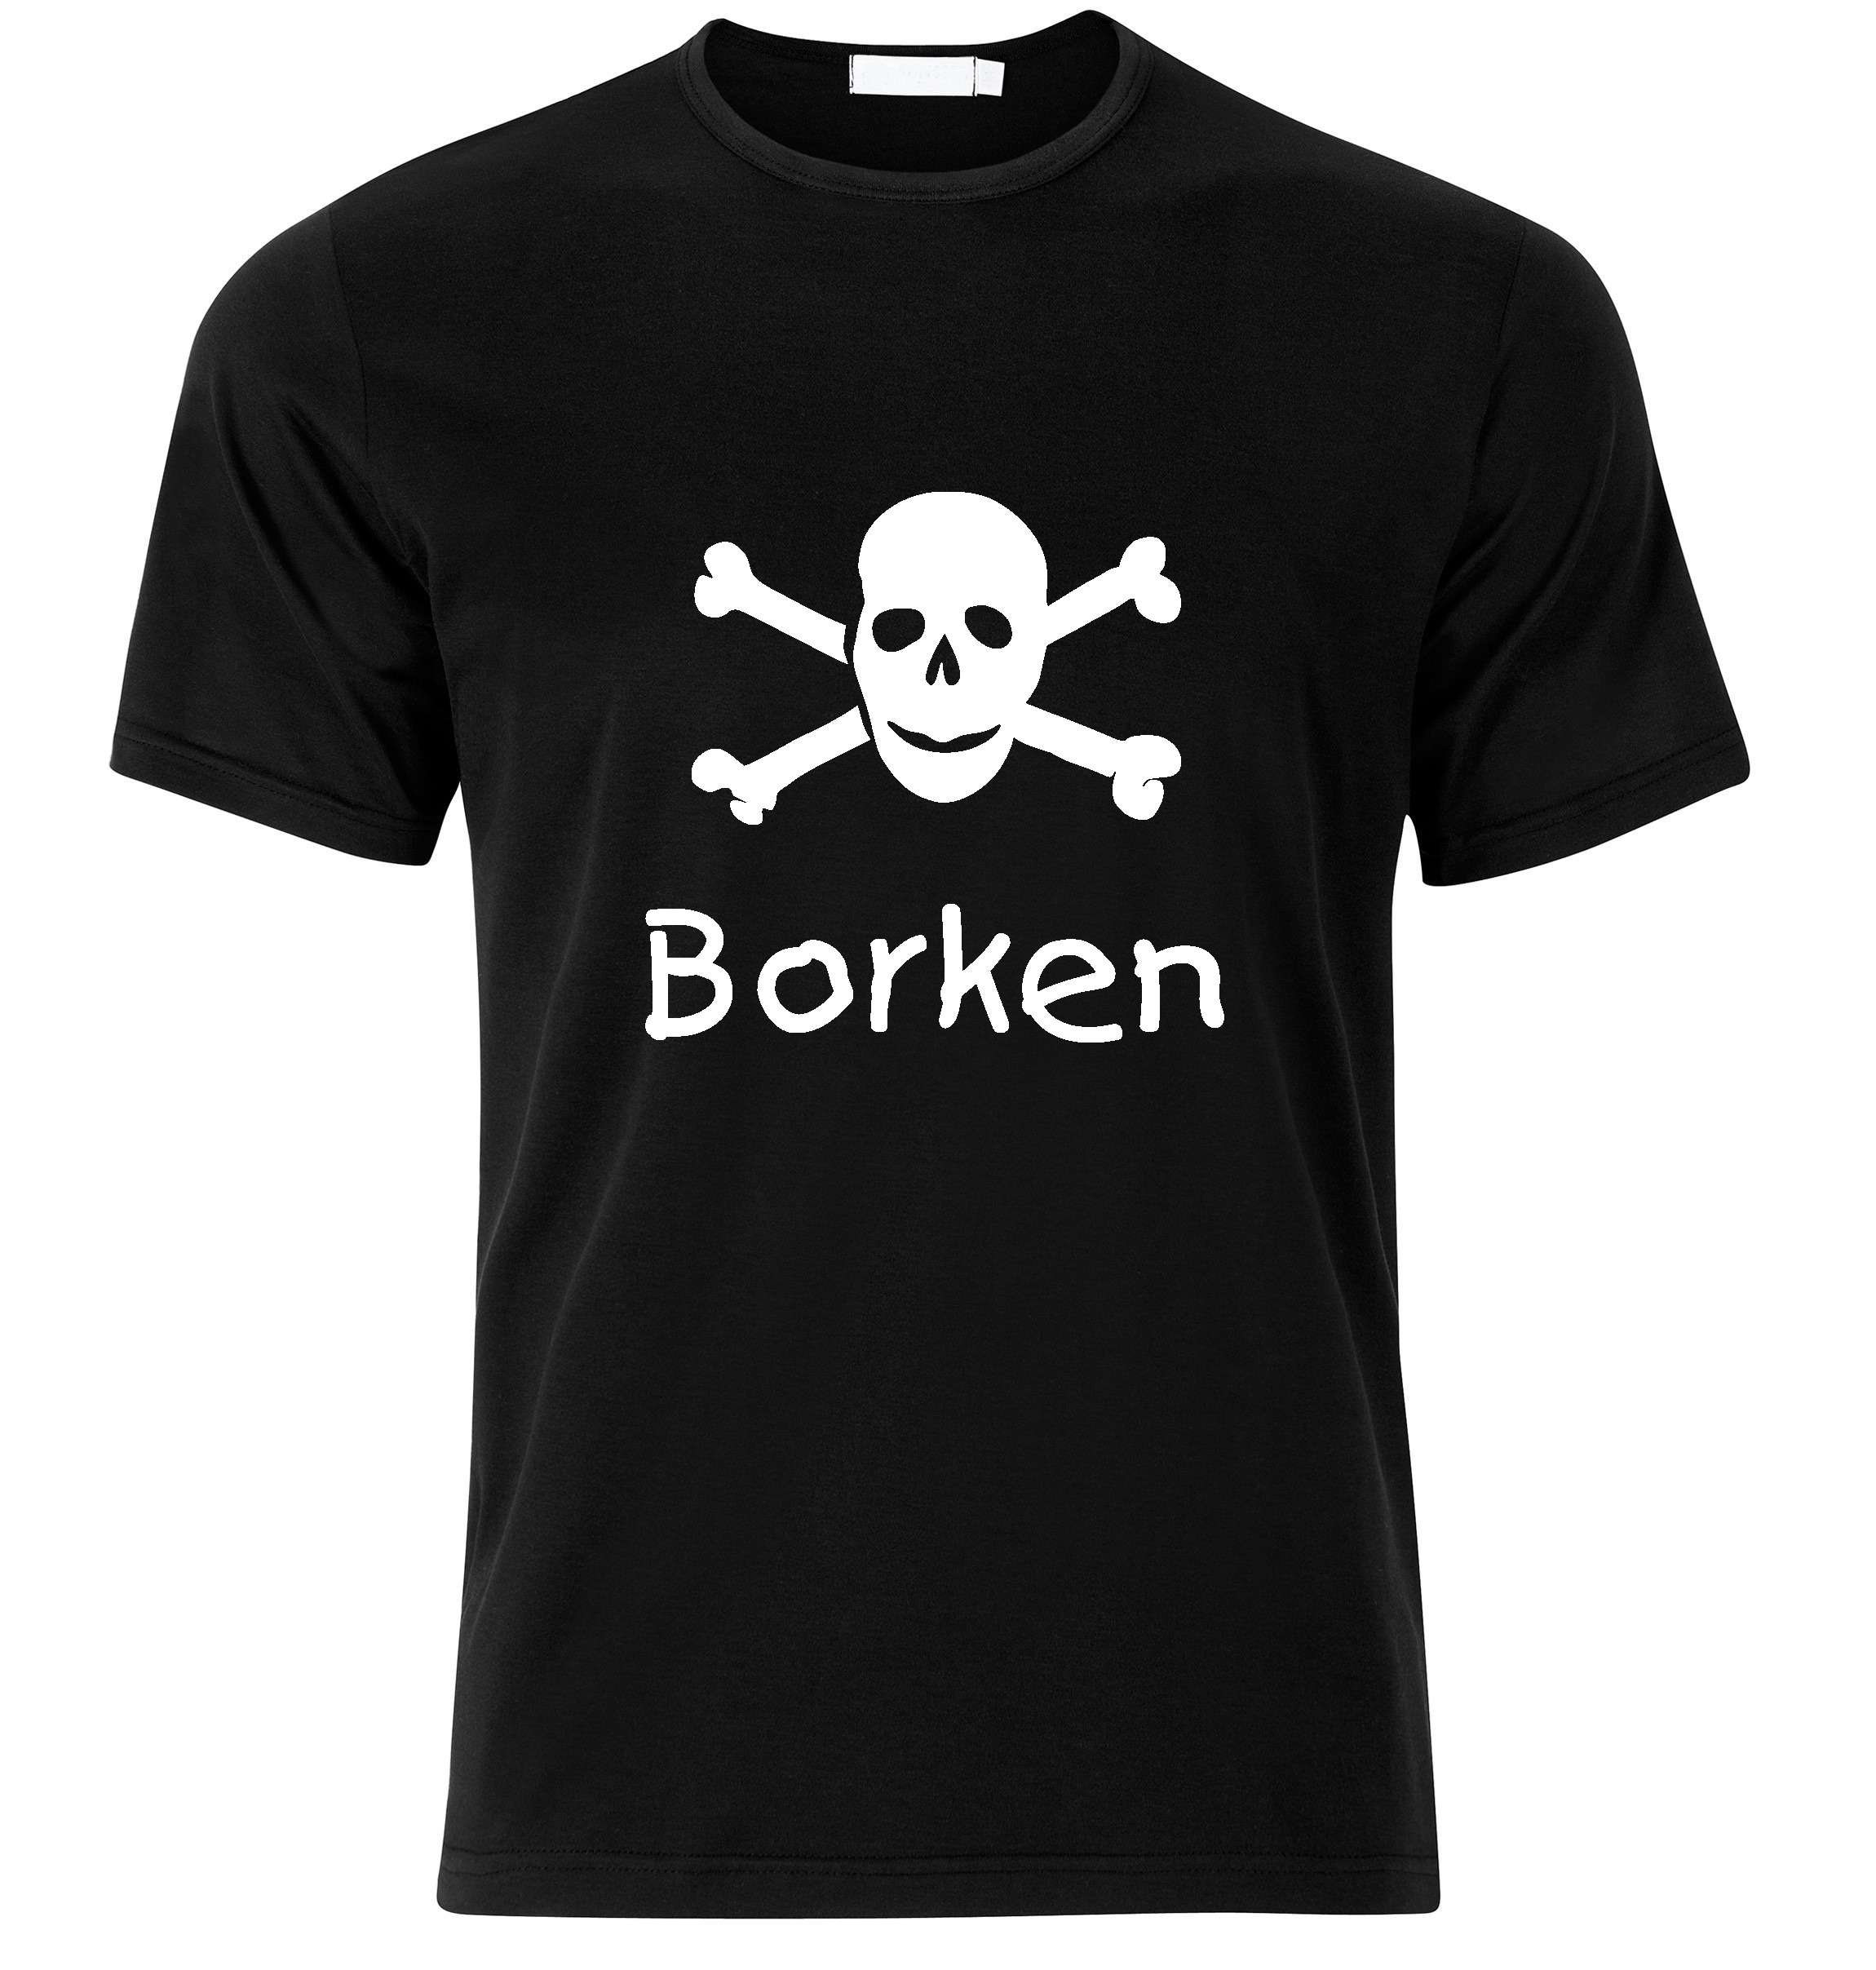 T-Shirt Borken Jolly Roger, Totenkopf